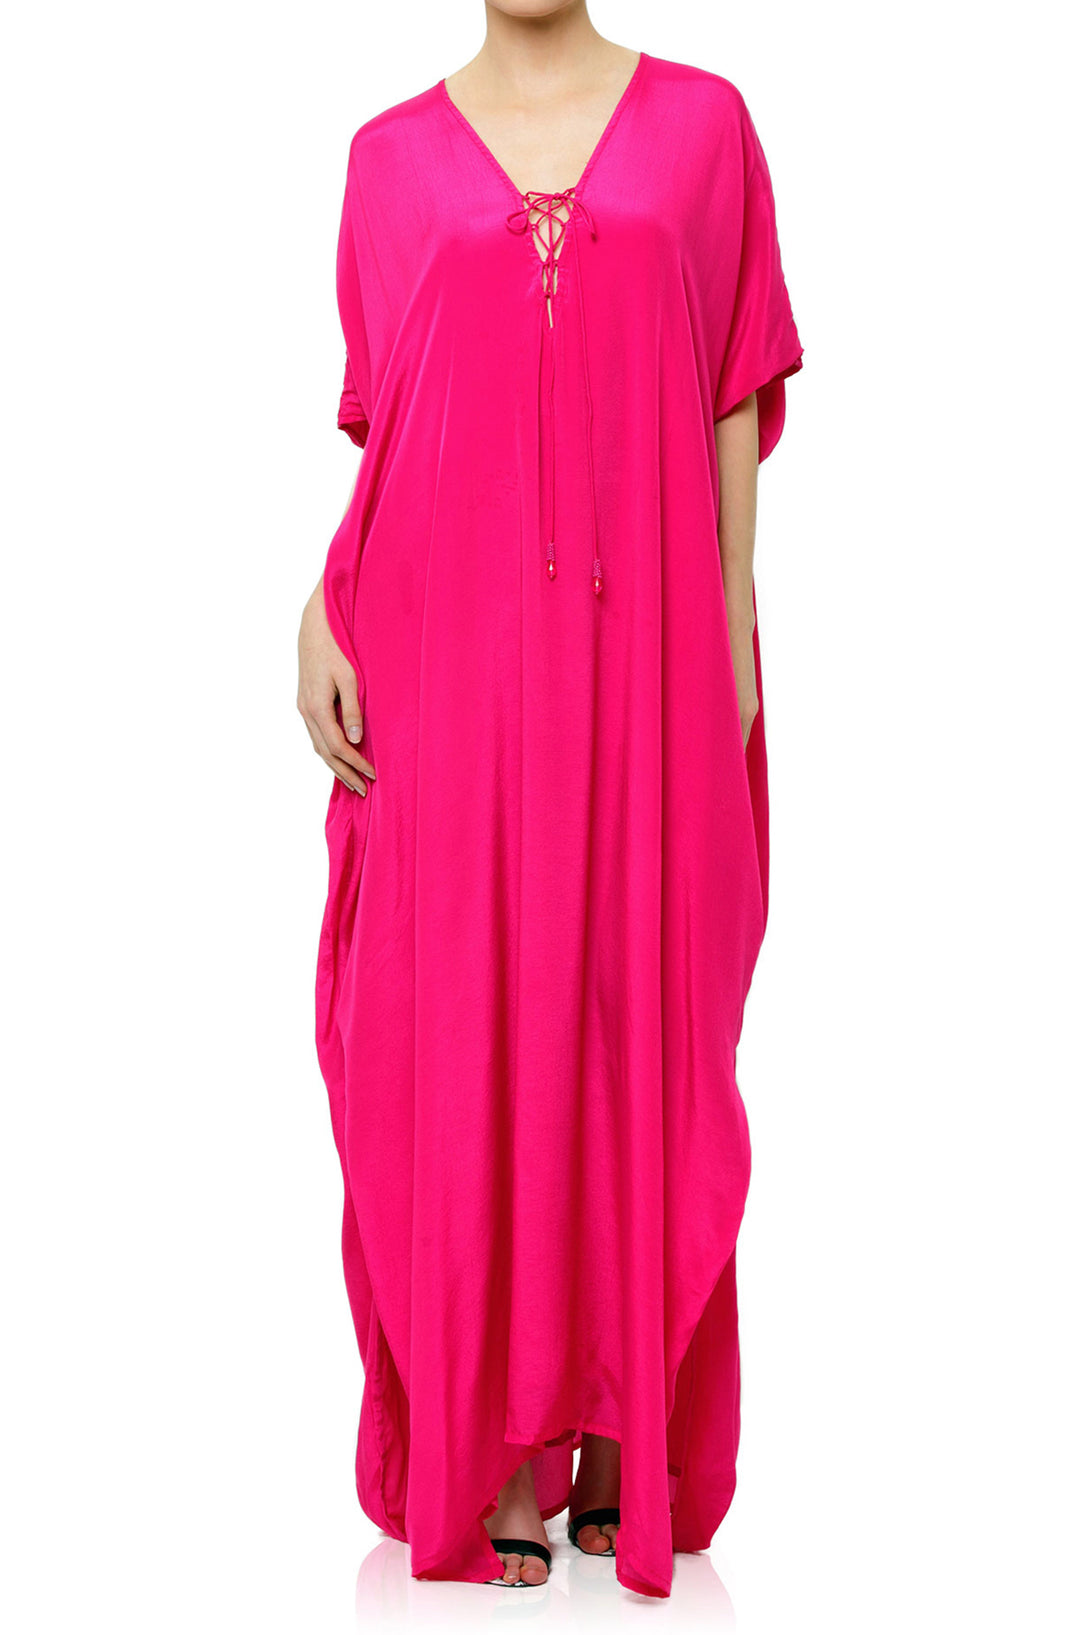   caftans for plus size, silk caftan dress, Shahida Parides, caftans for women, dresses for vacation,